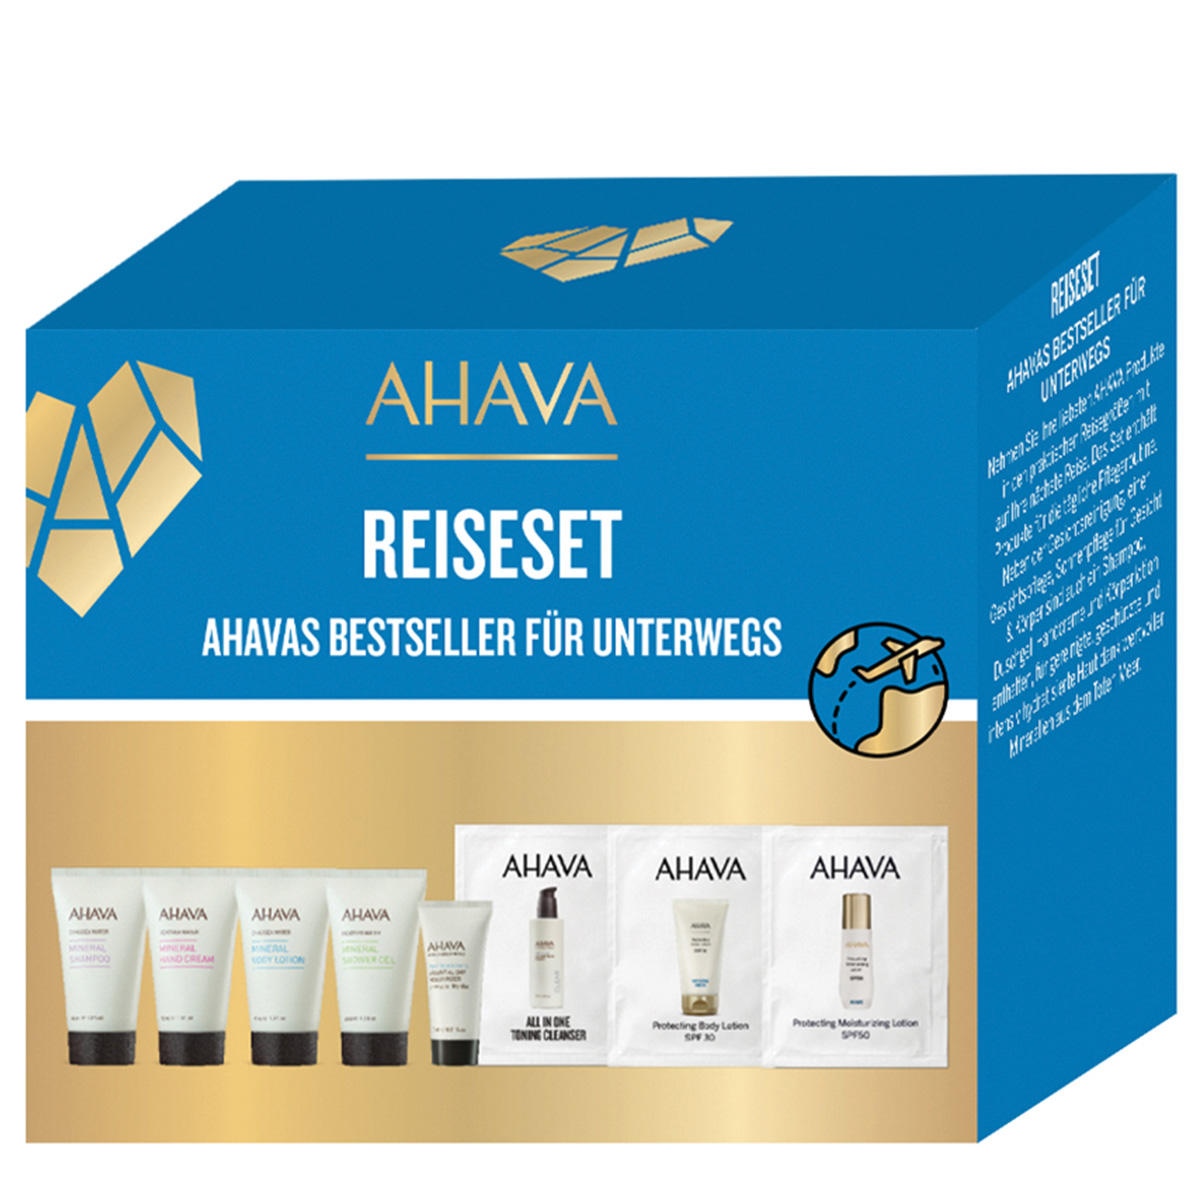 AHAVA Travel set   - 1